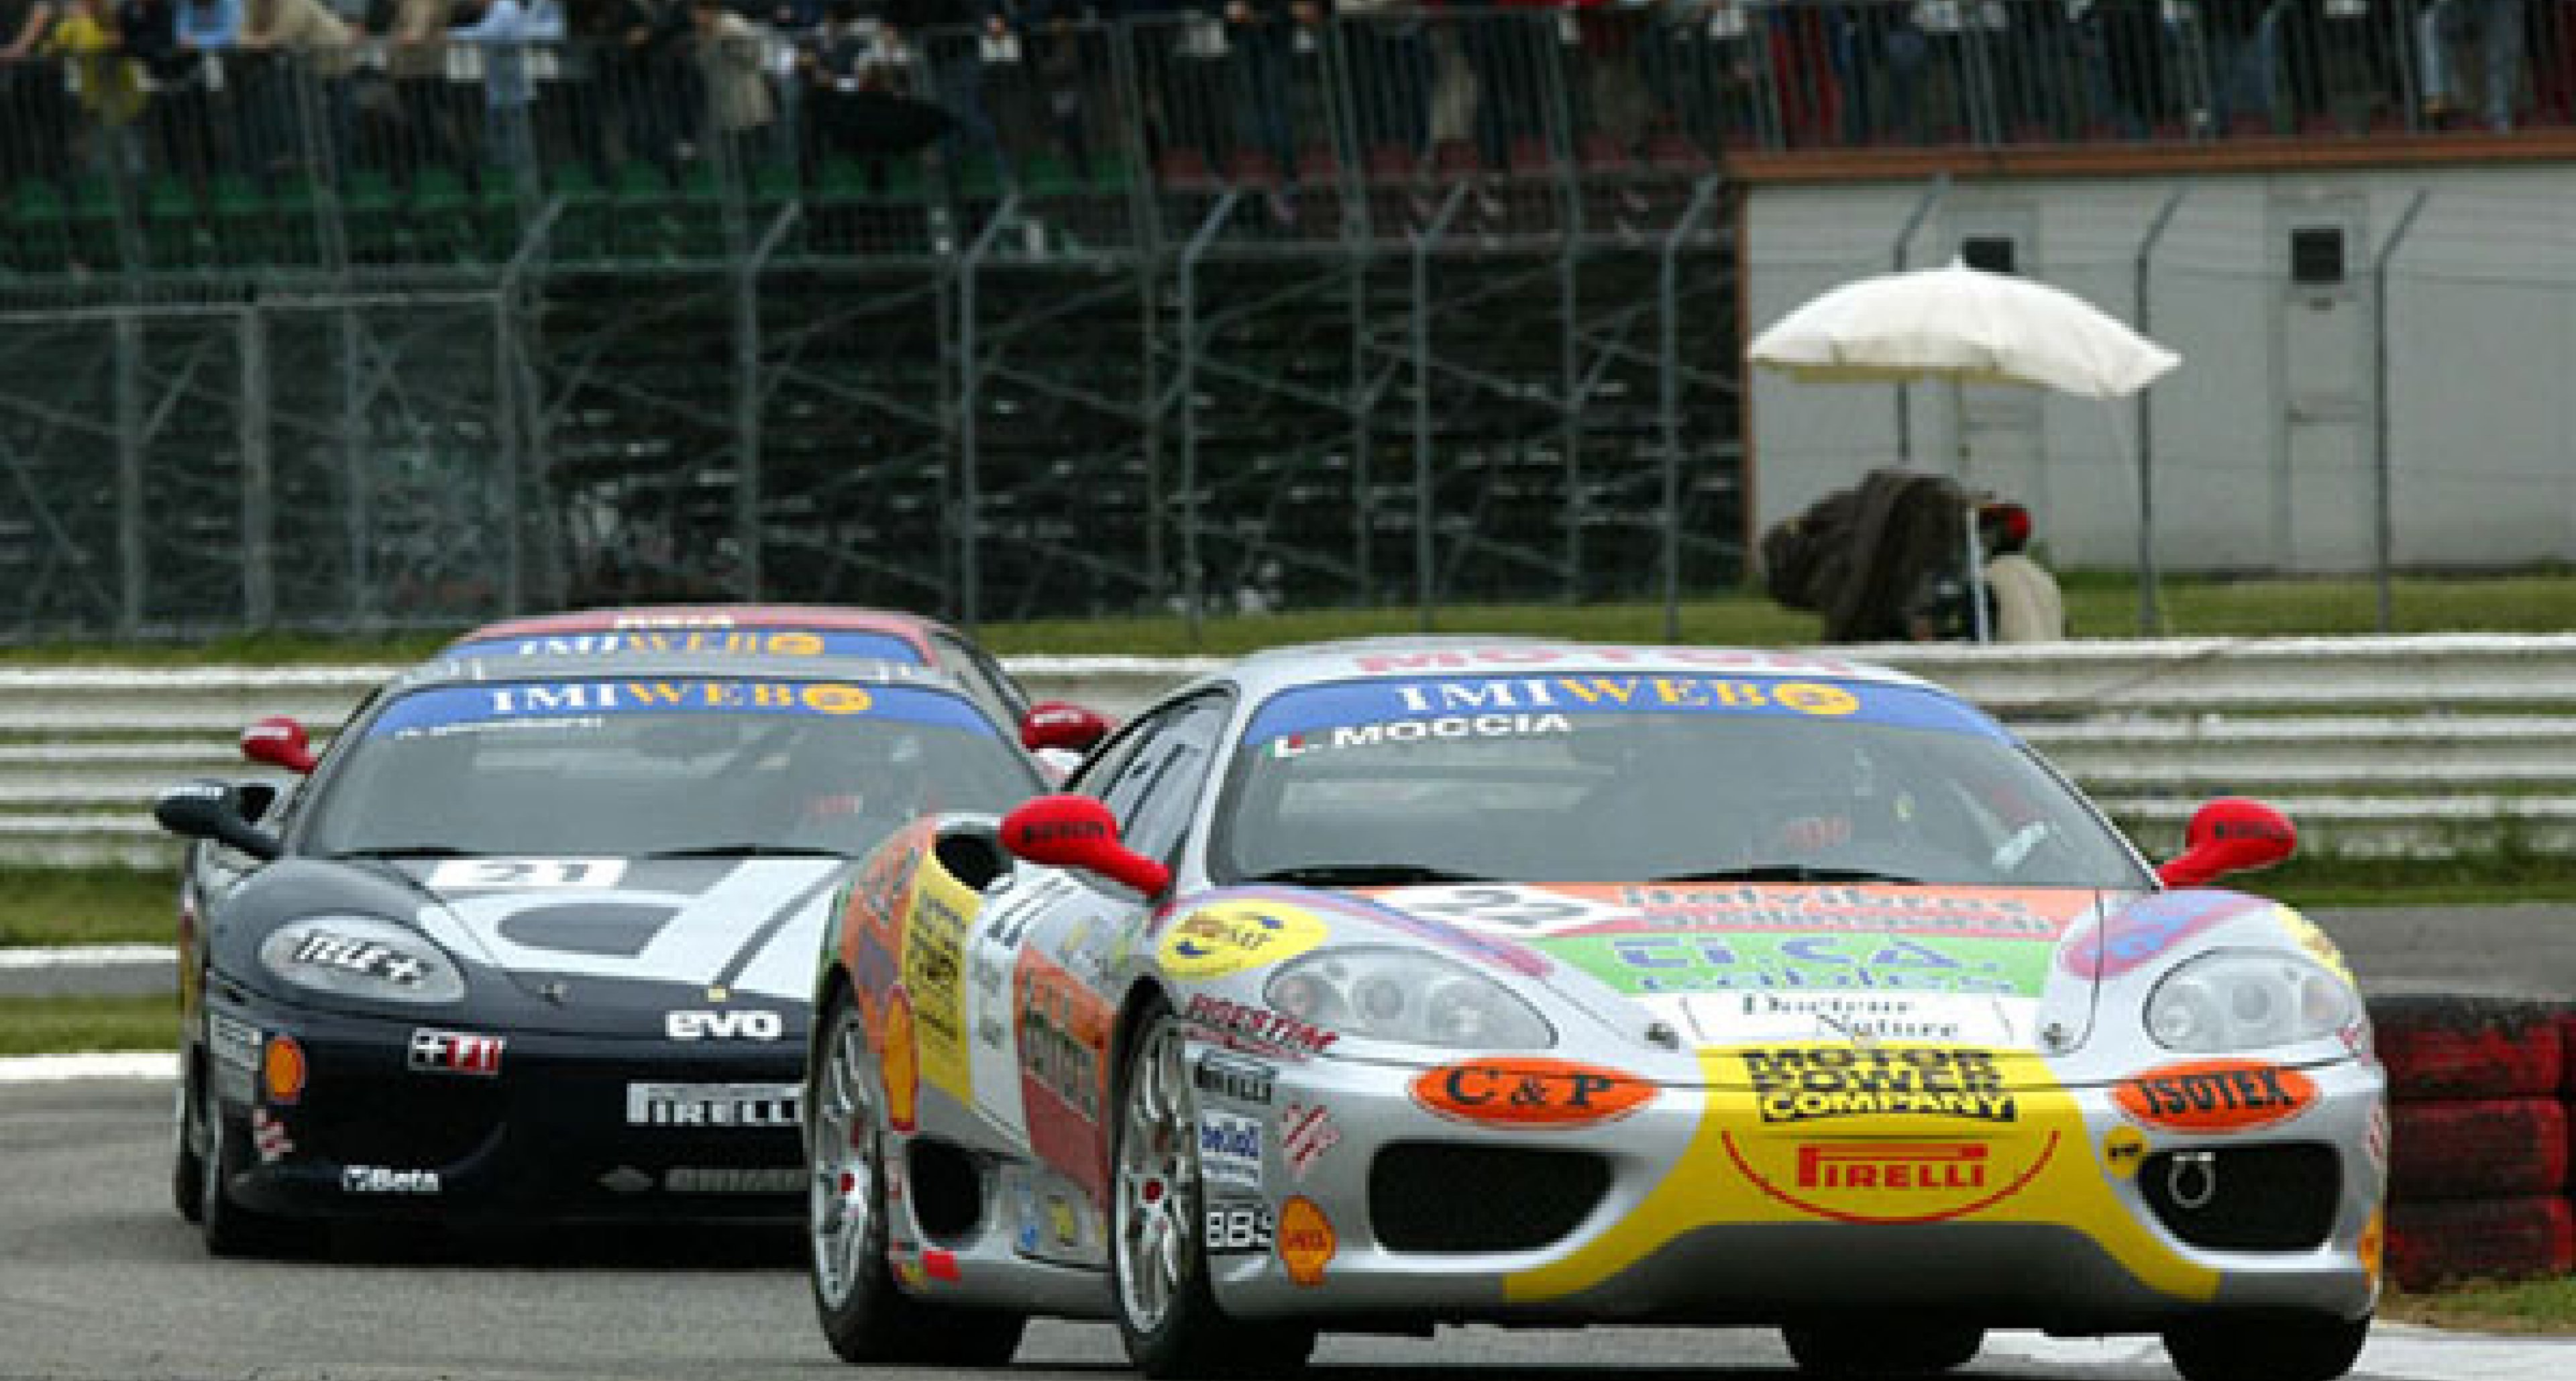 Ferrari challenge Misano May 2002